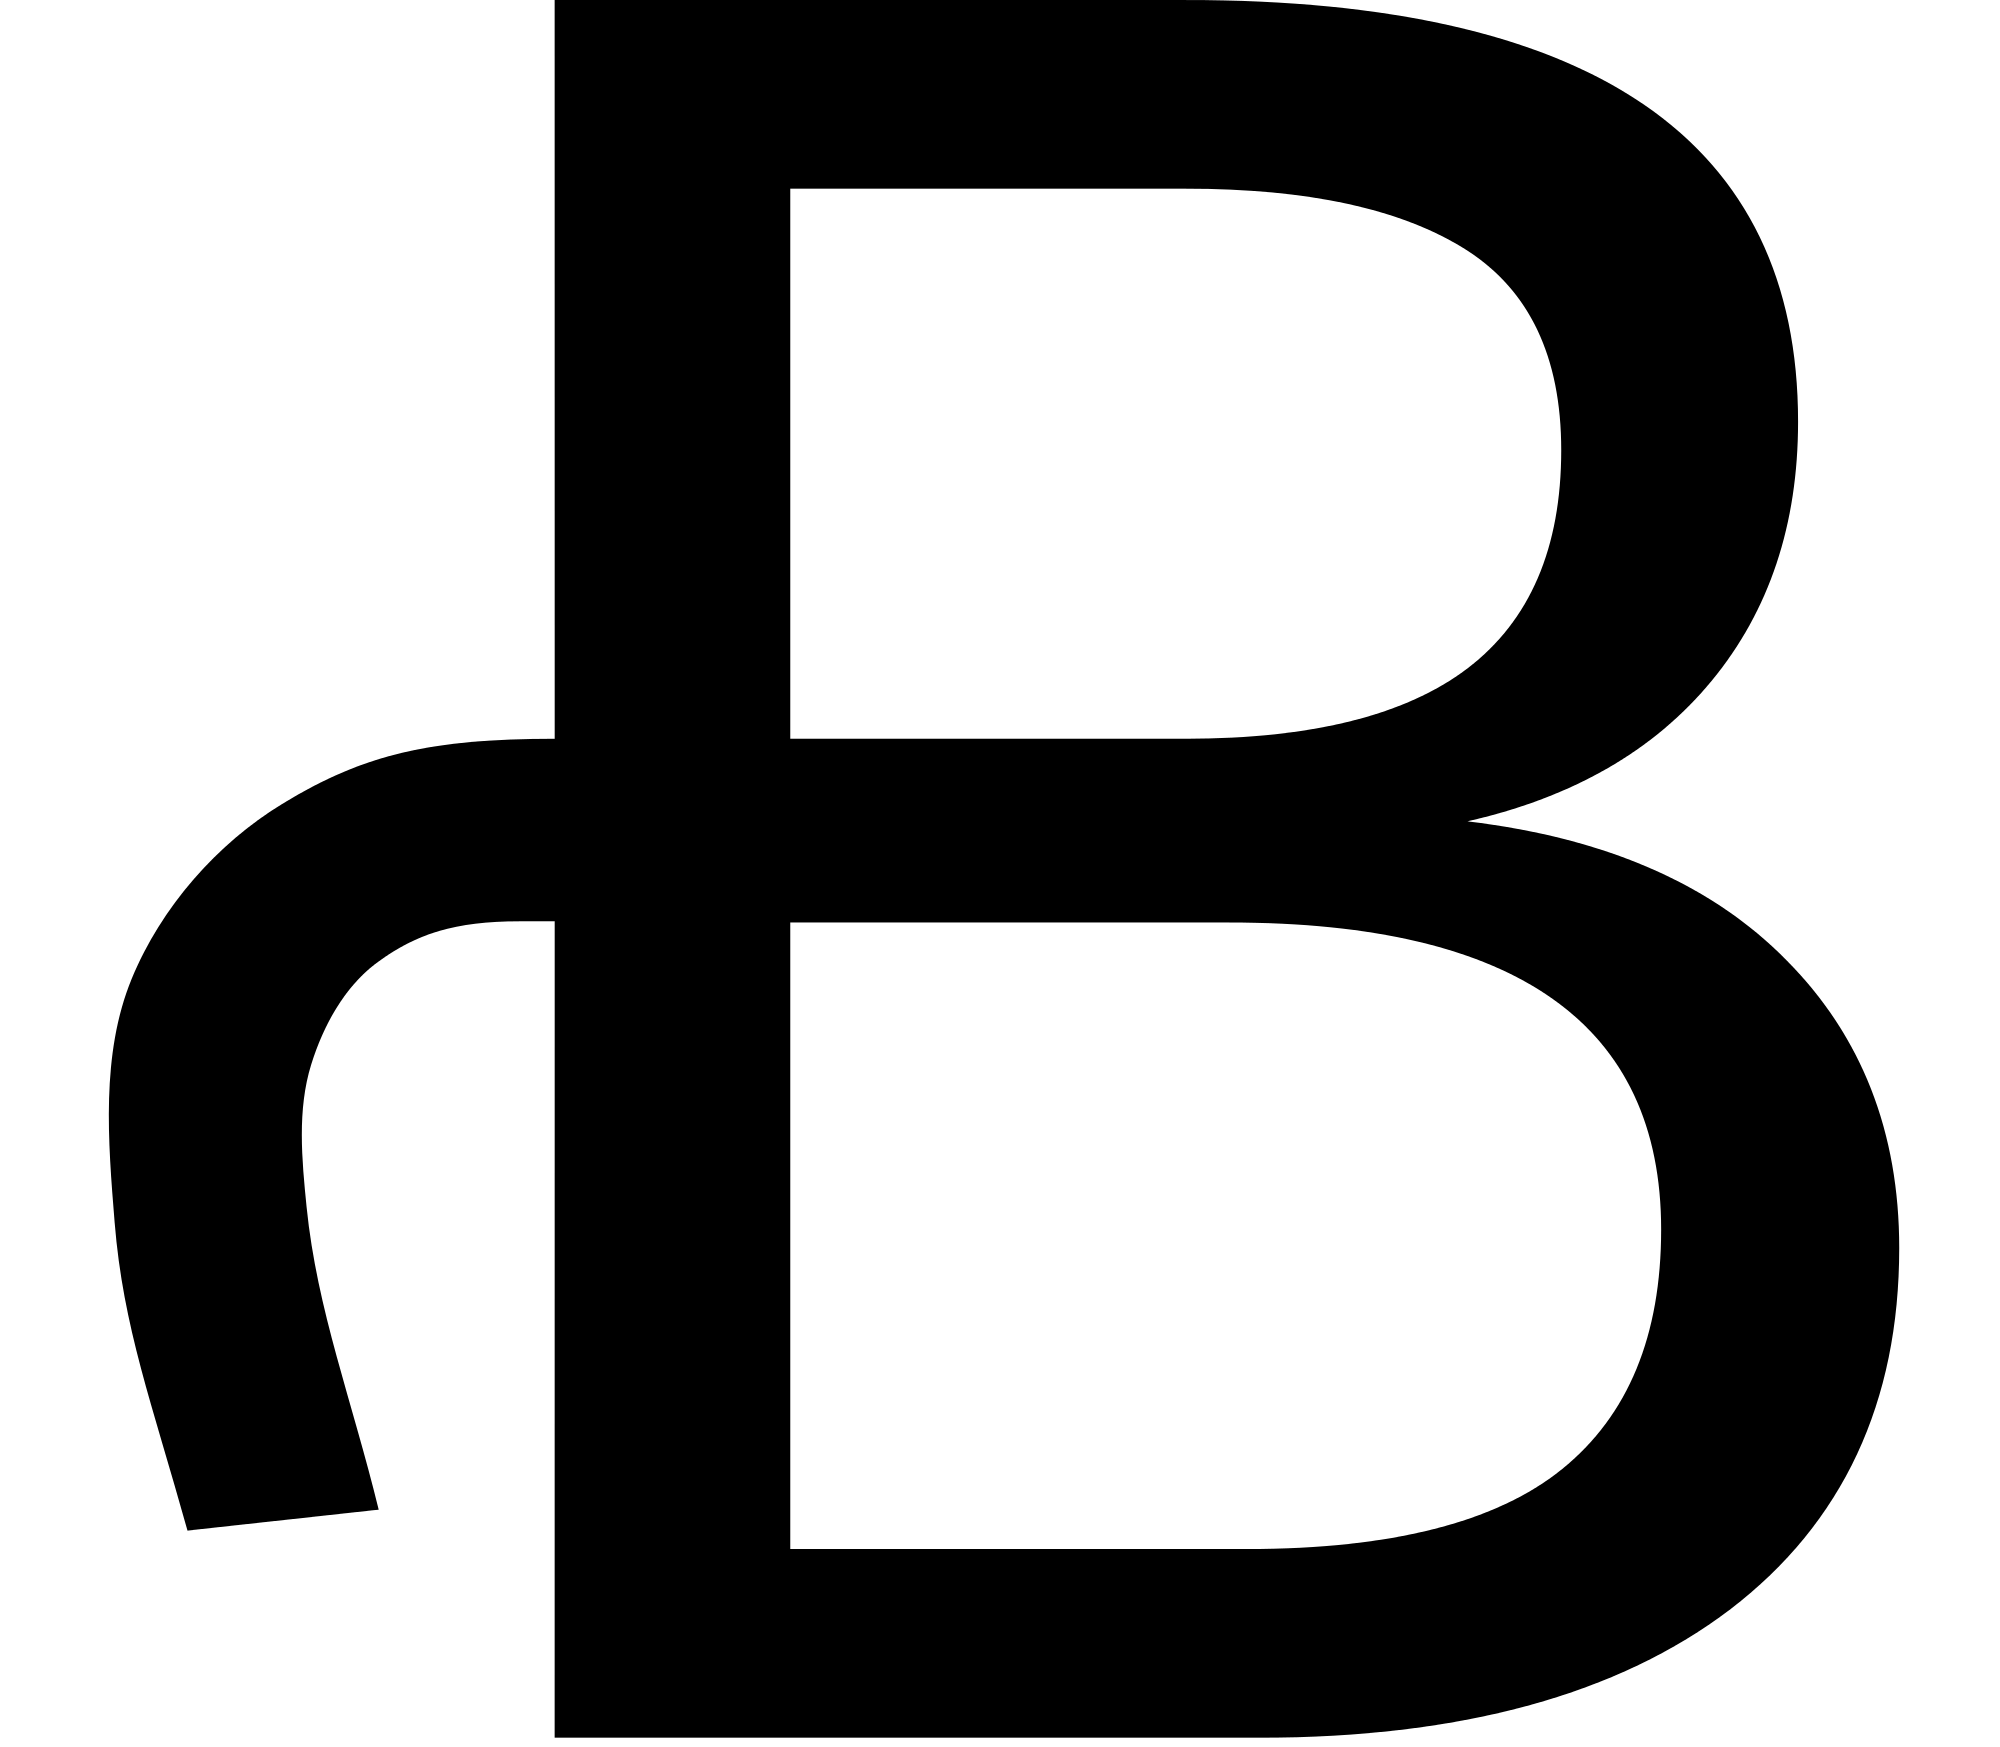 Capital B Logo - File:Latin capital letter B with flourish.svg - Wikimedia Commons